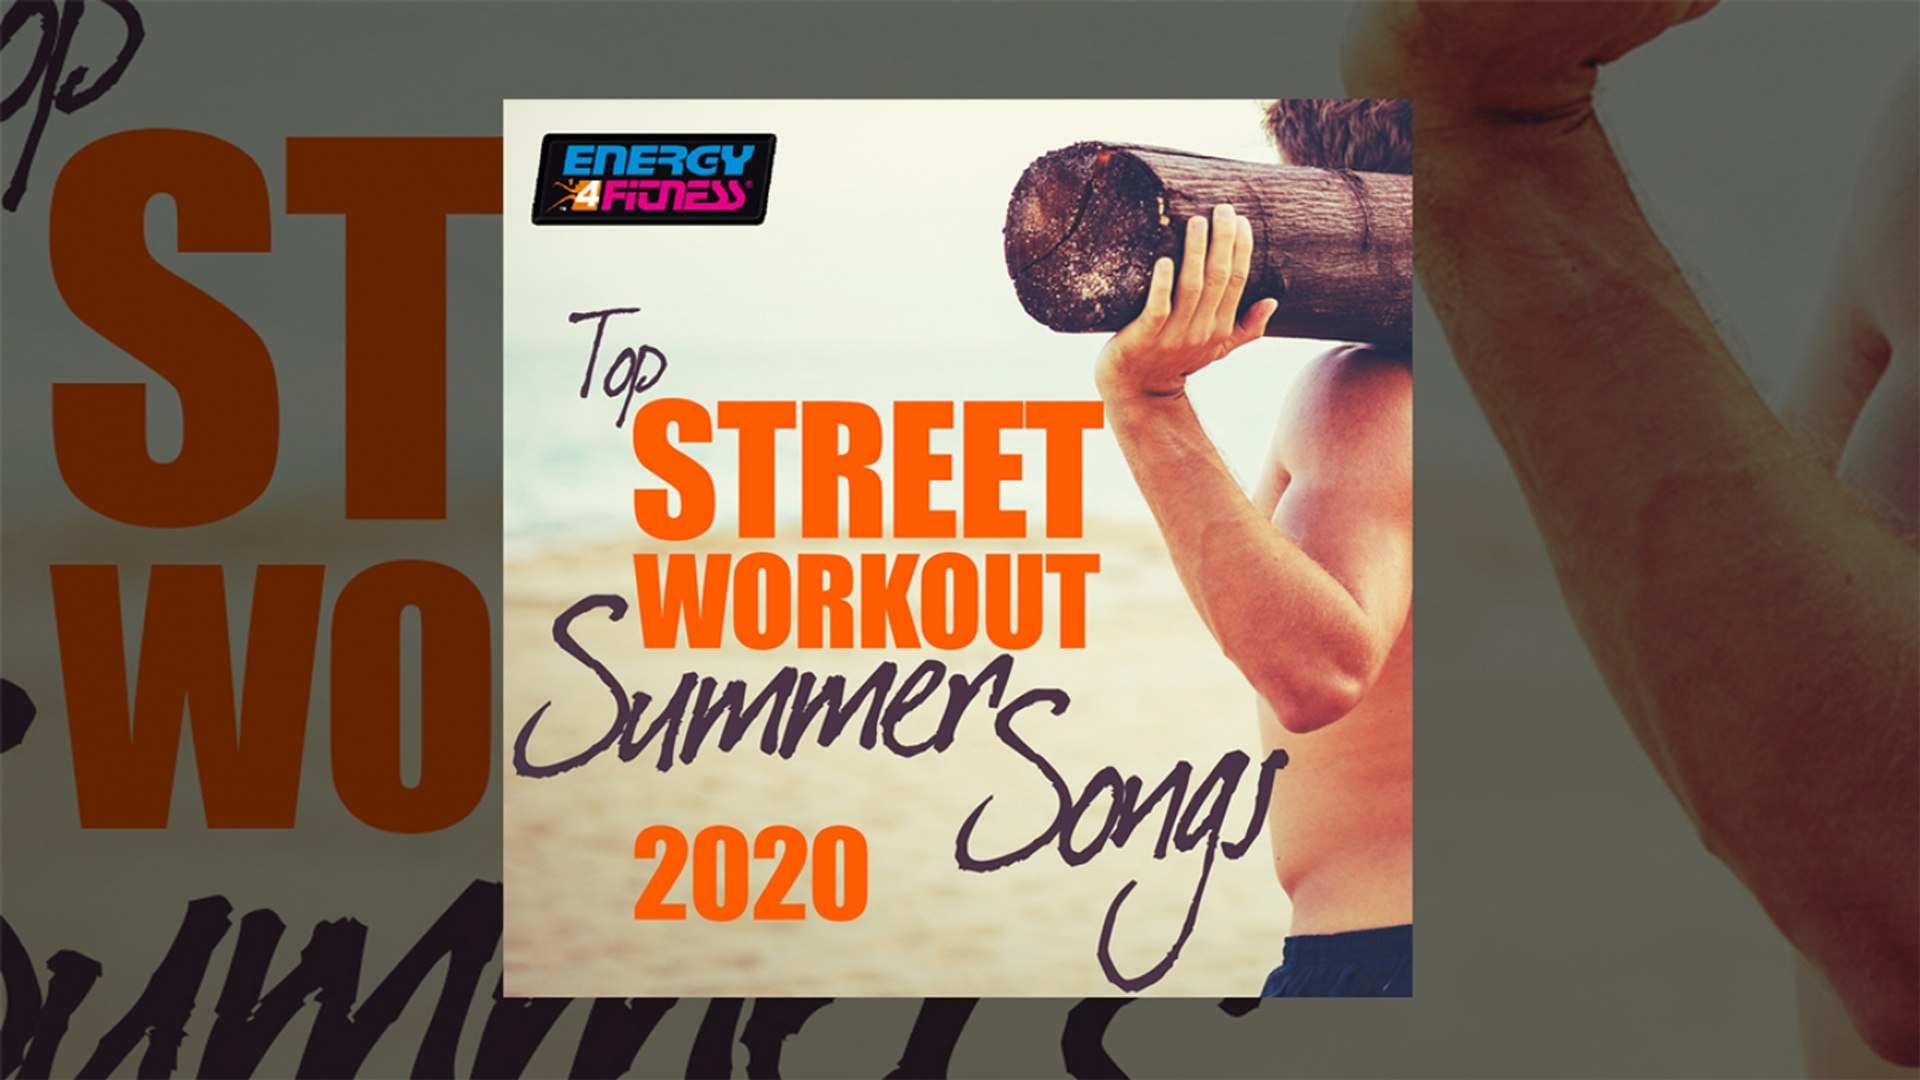 E4F - Top Street Workout Summer Songs 2020 - Fitness & Music 2020